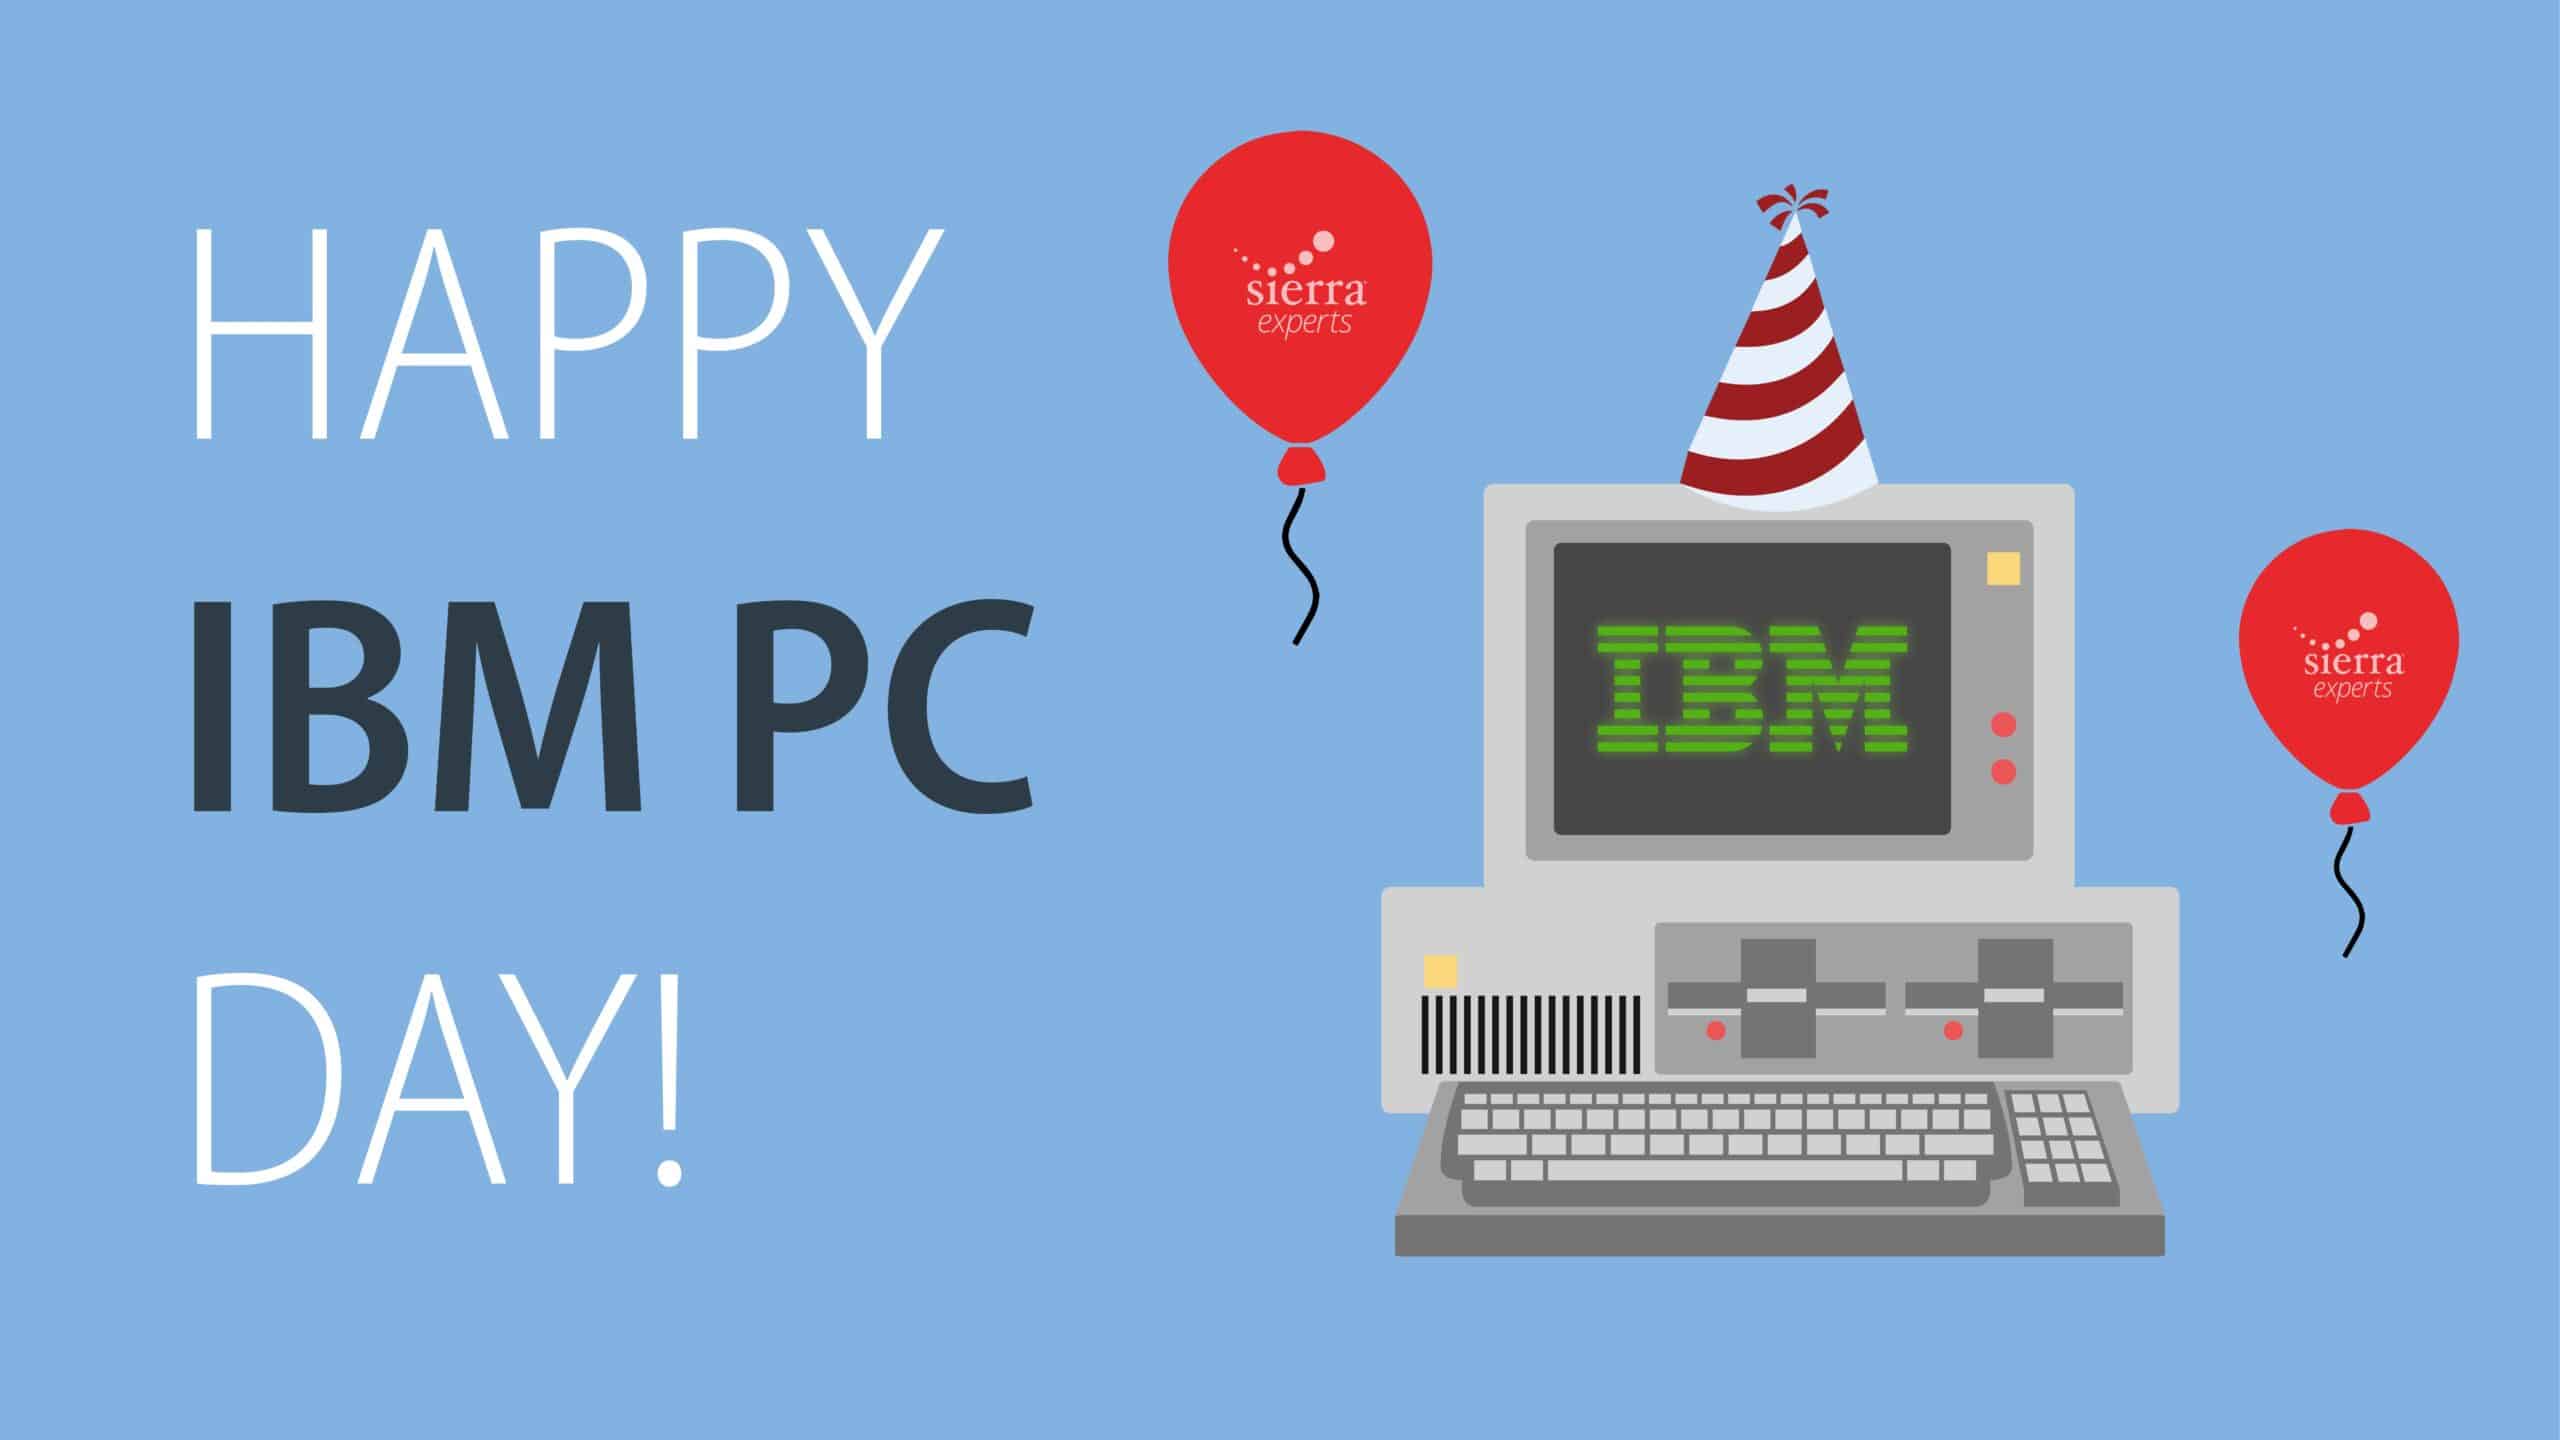 Happy IBM PC Day!